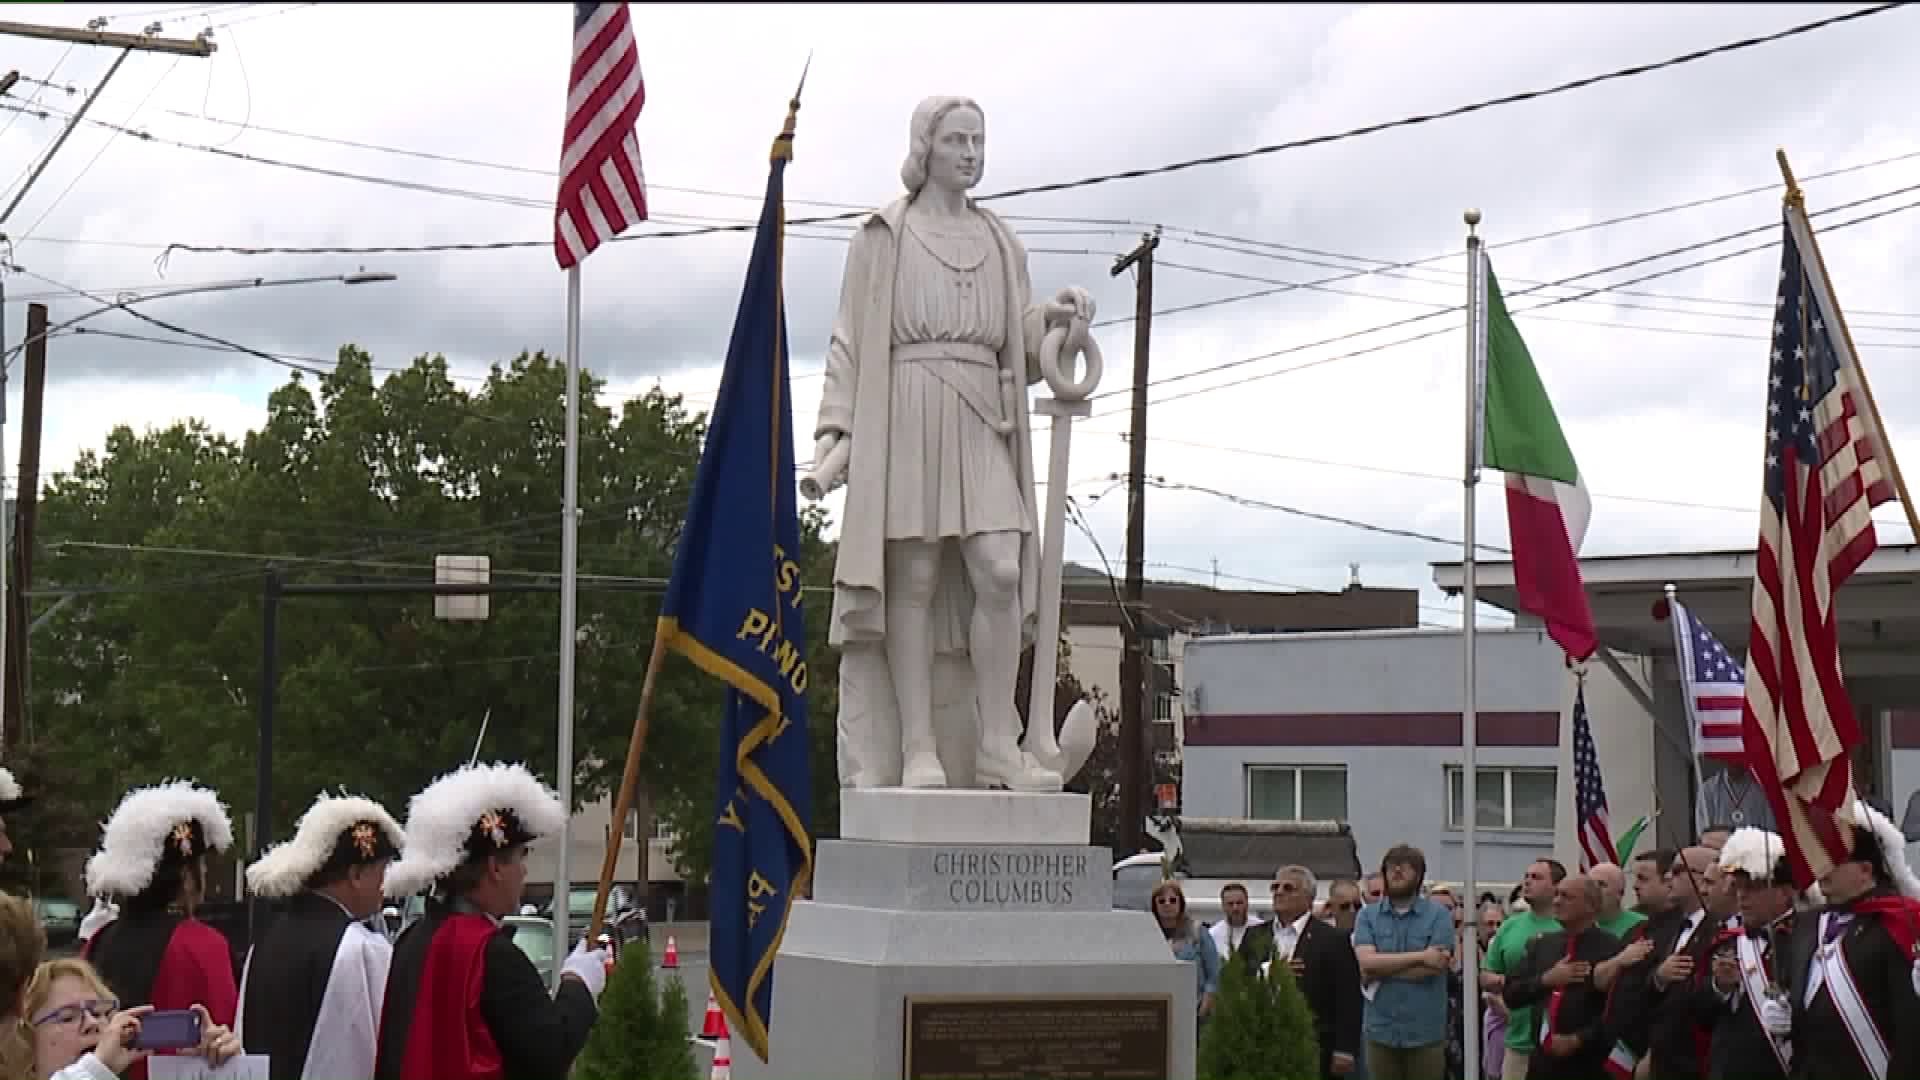 Columbus Statue Rededicated in Pittston